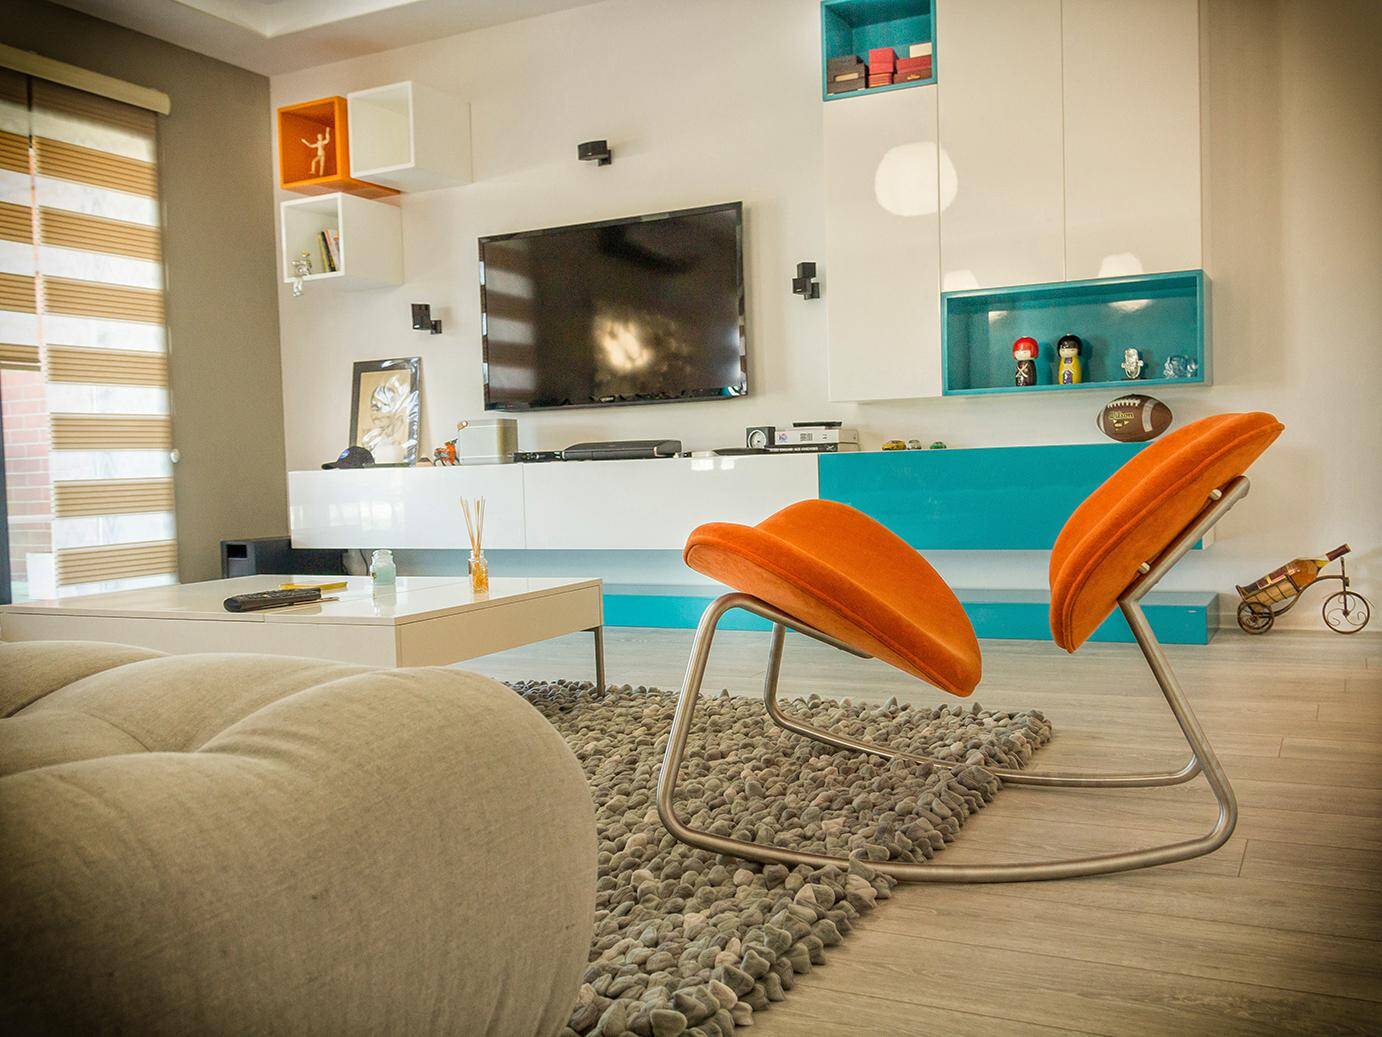 M apartment - Emerald Residence by Decorate it - HomeWorldDesign (1)